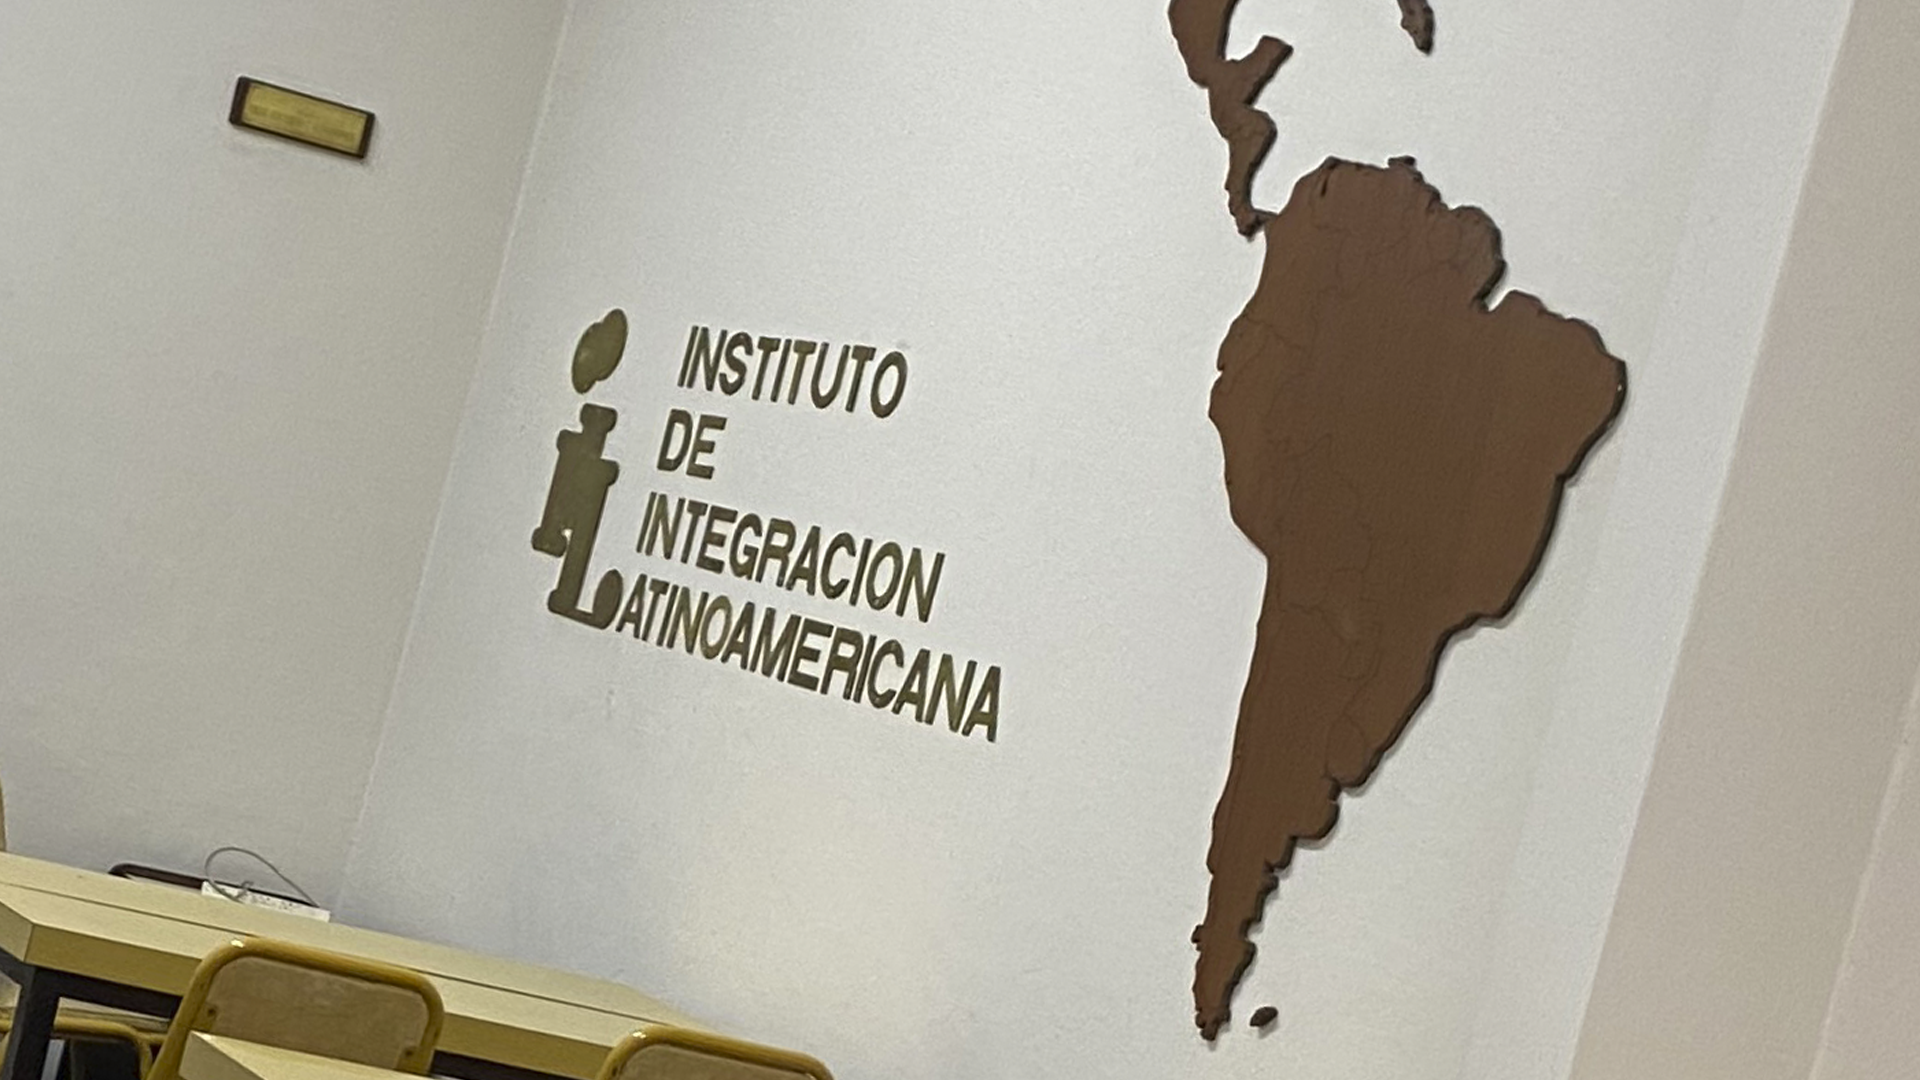 Instituto de Integración latinoamericana